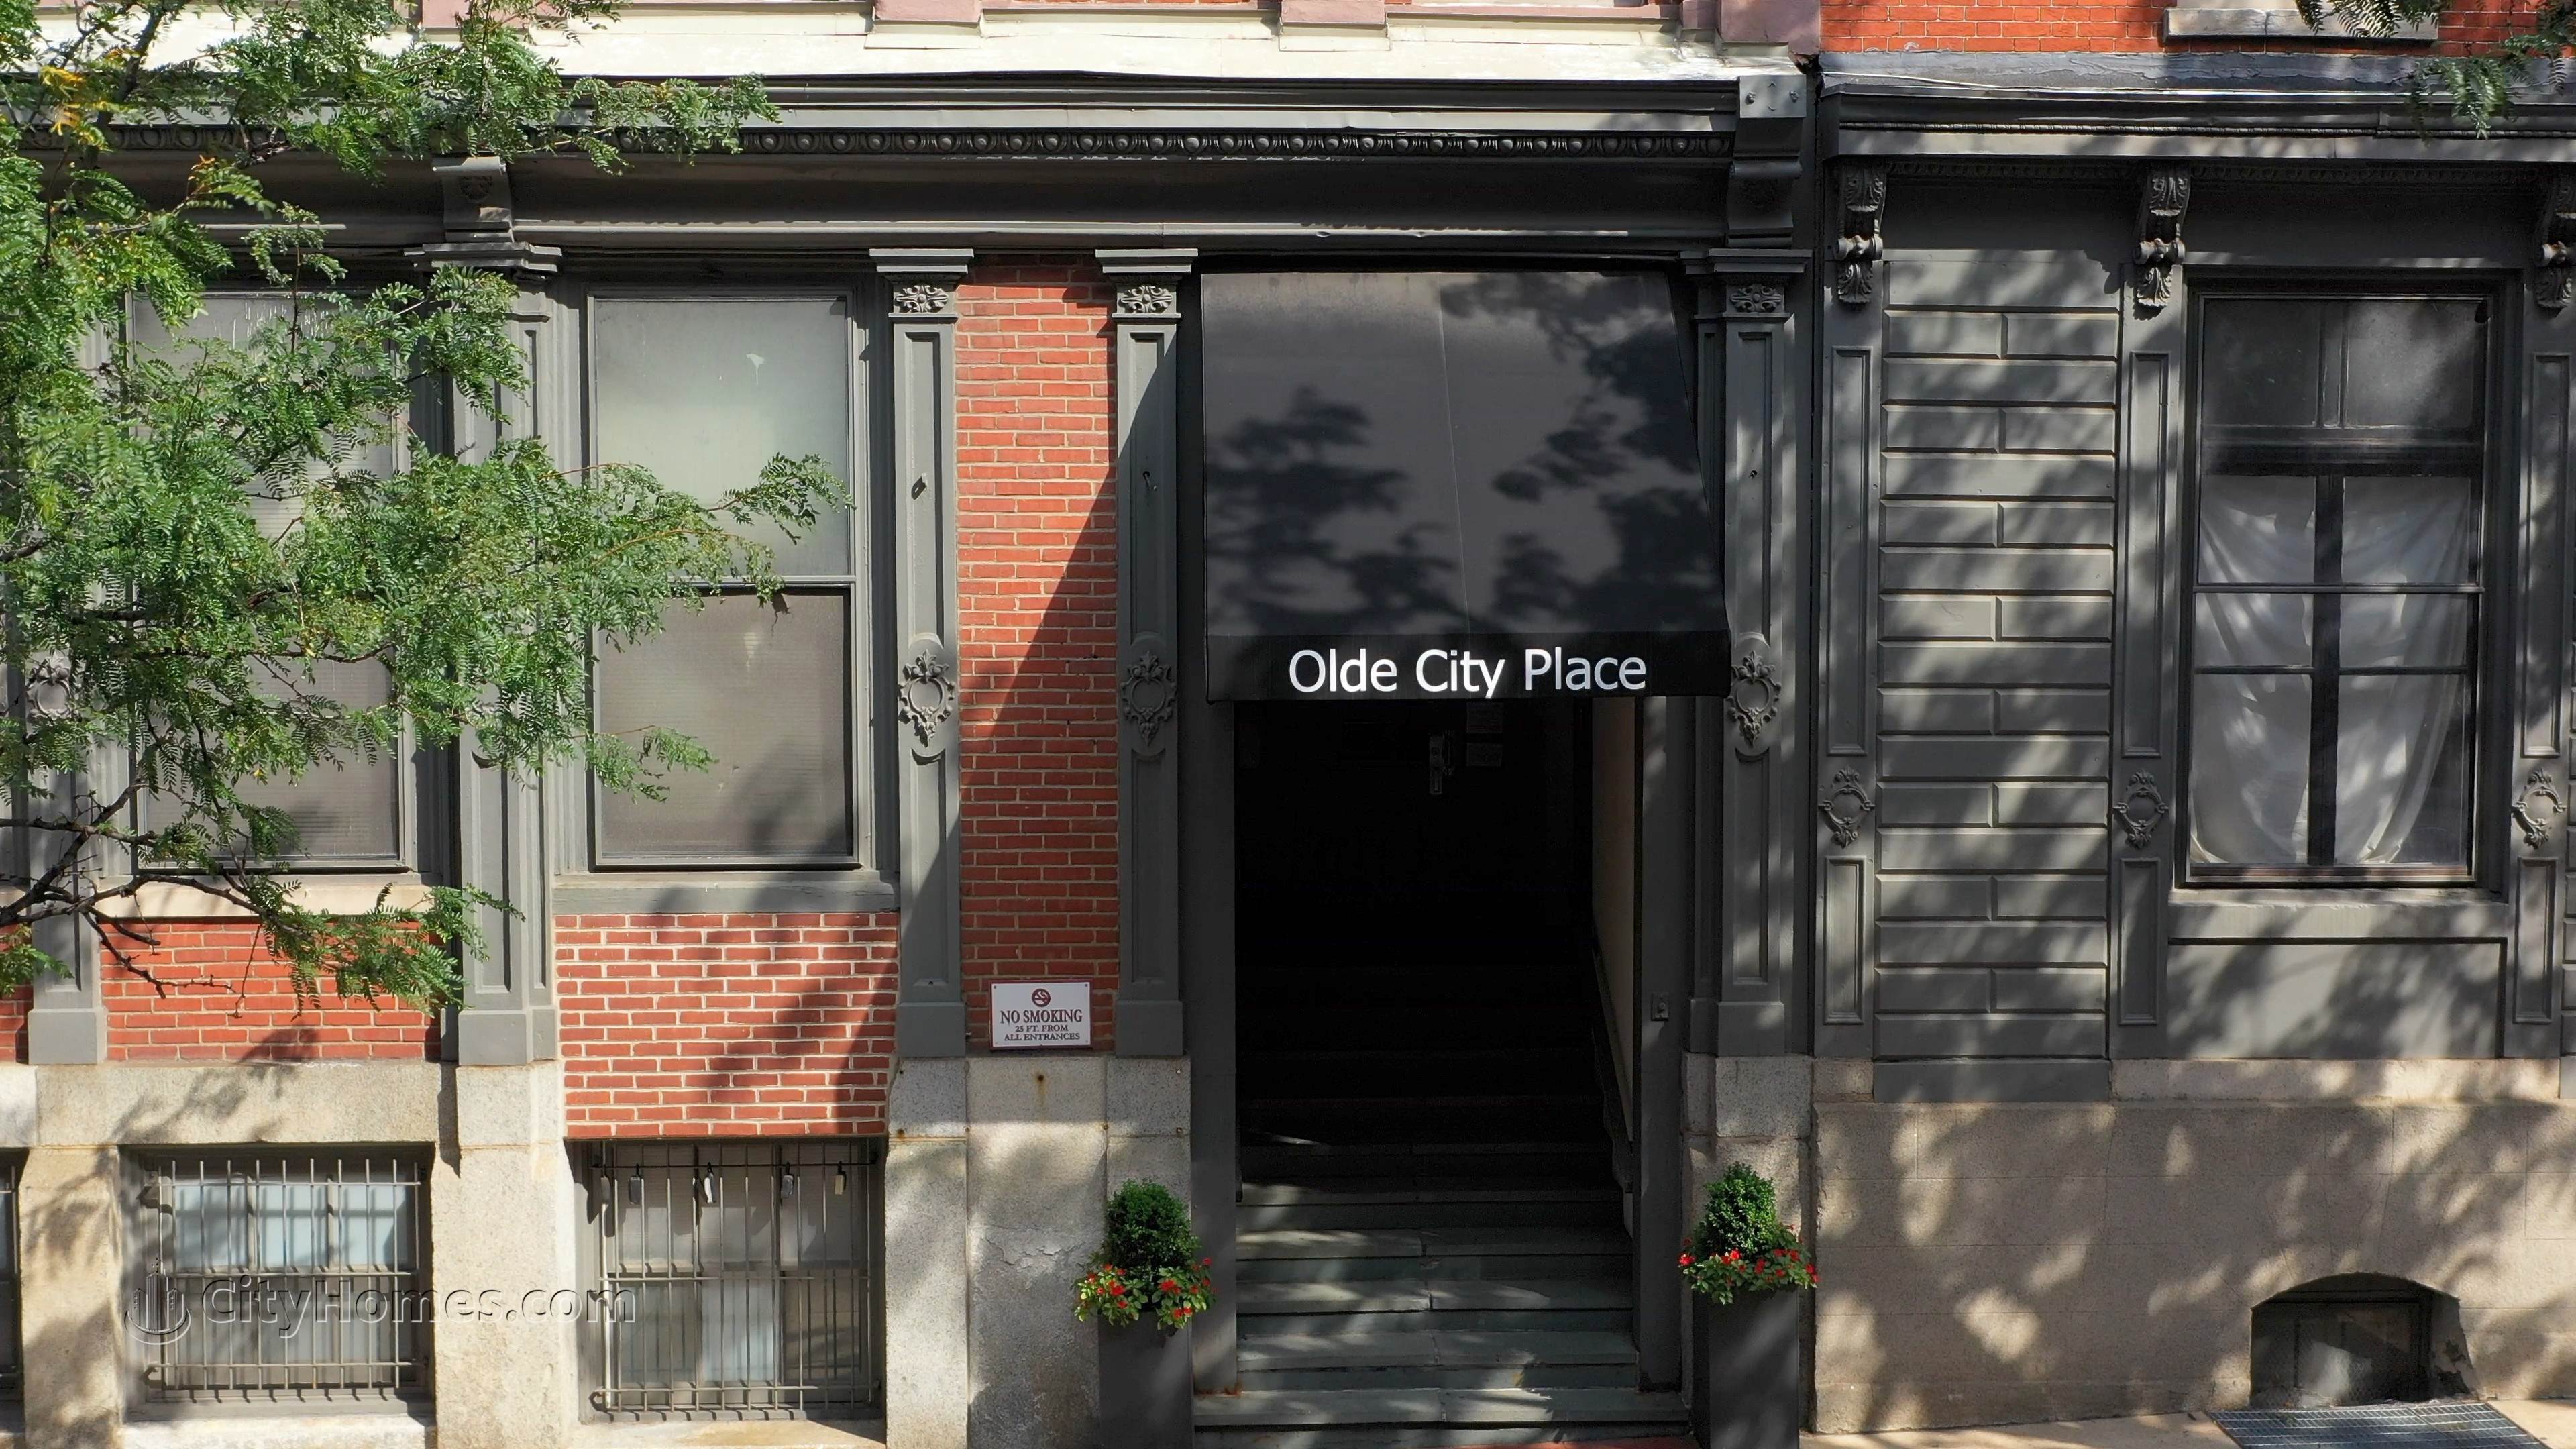 Olde City Place edificio a 205-11 N 4th St, Old City, Philadelphia, PA 19106